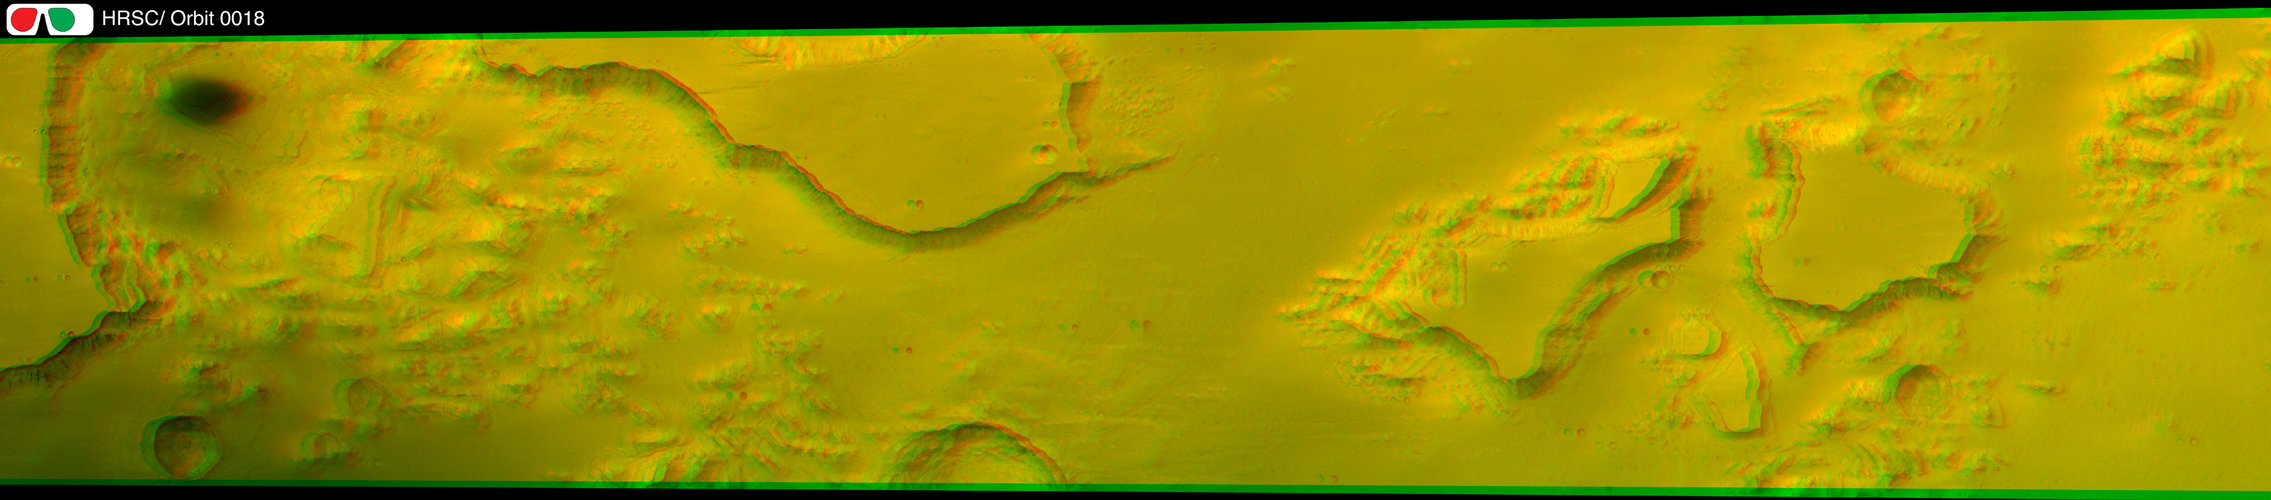 3D image of Valles Marineris taken by Mars Express HRSC